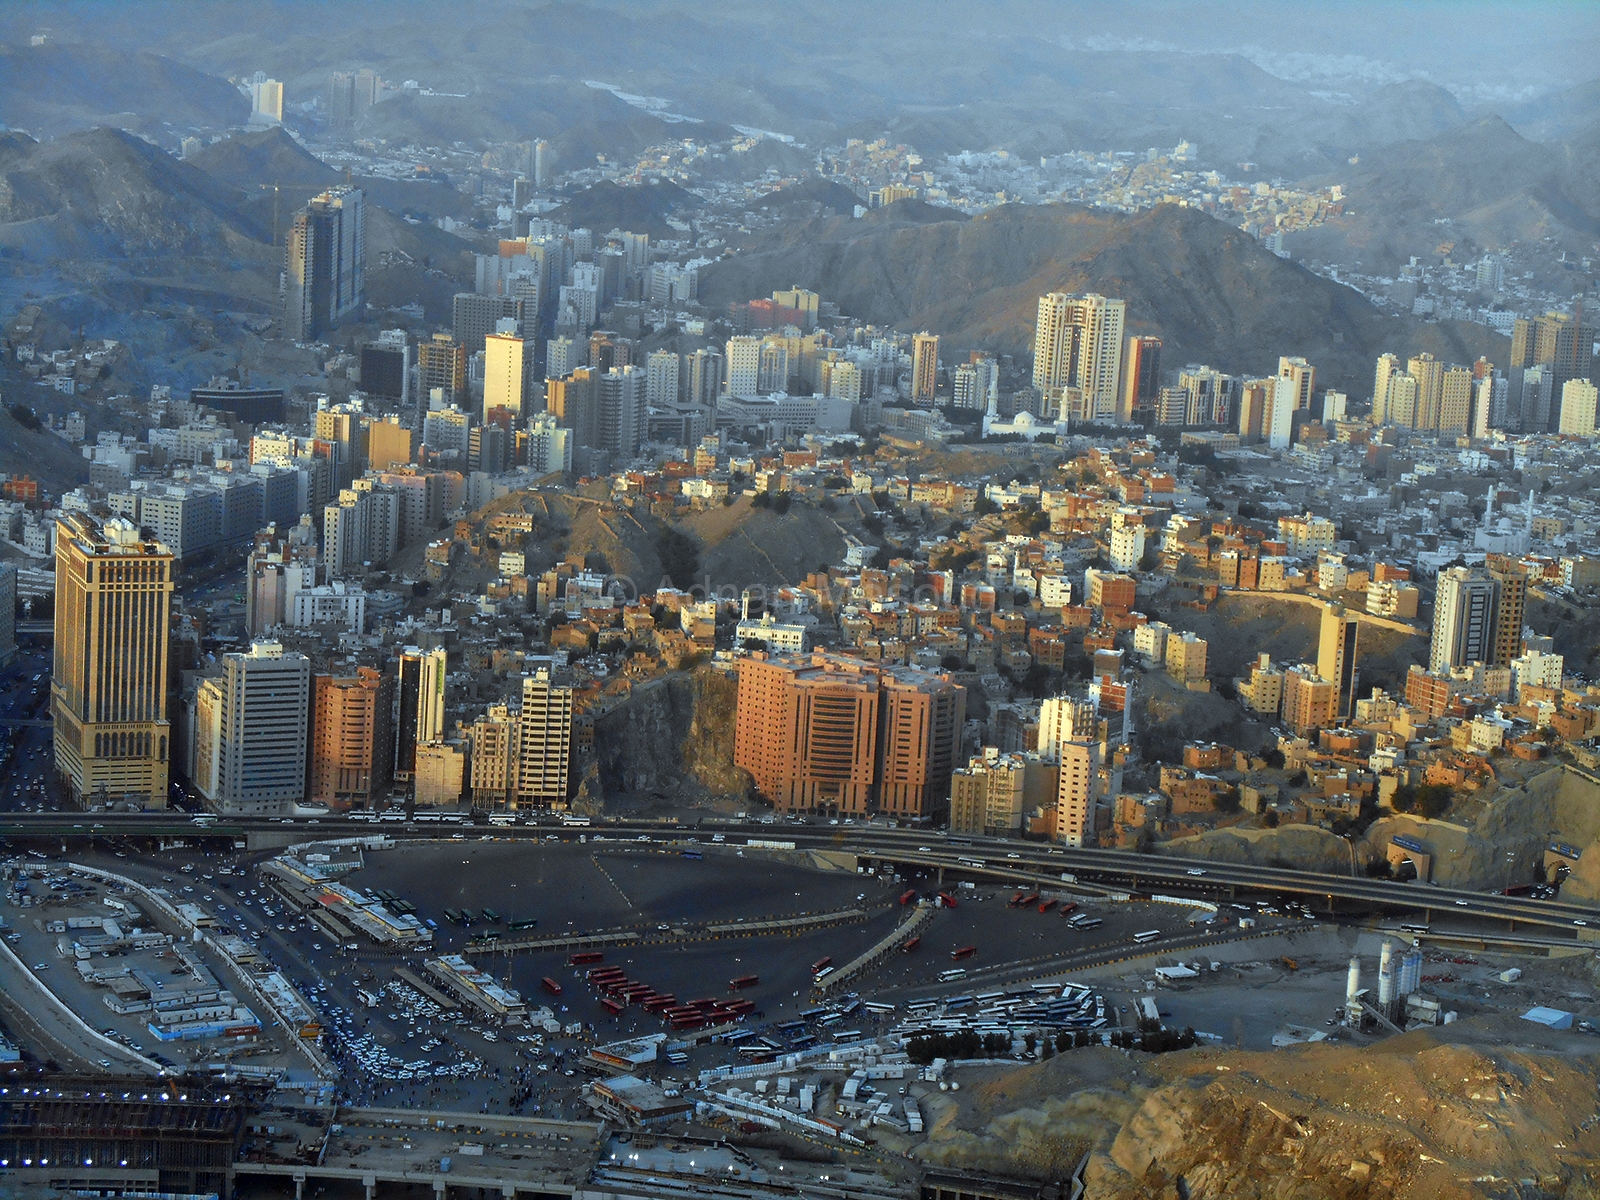 Makkah city view from Clock Tower.jpg